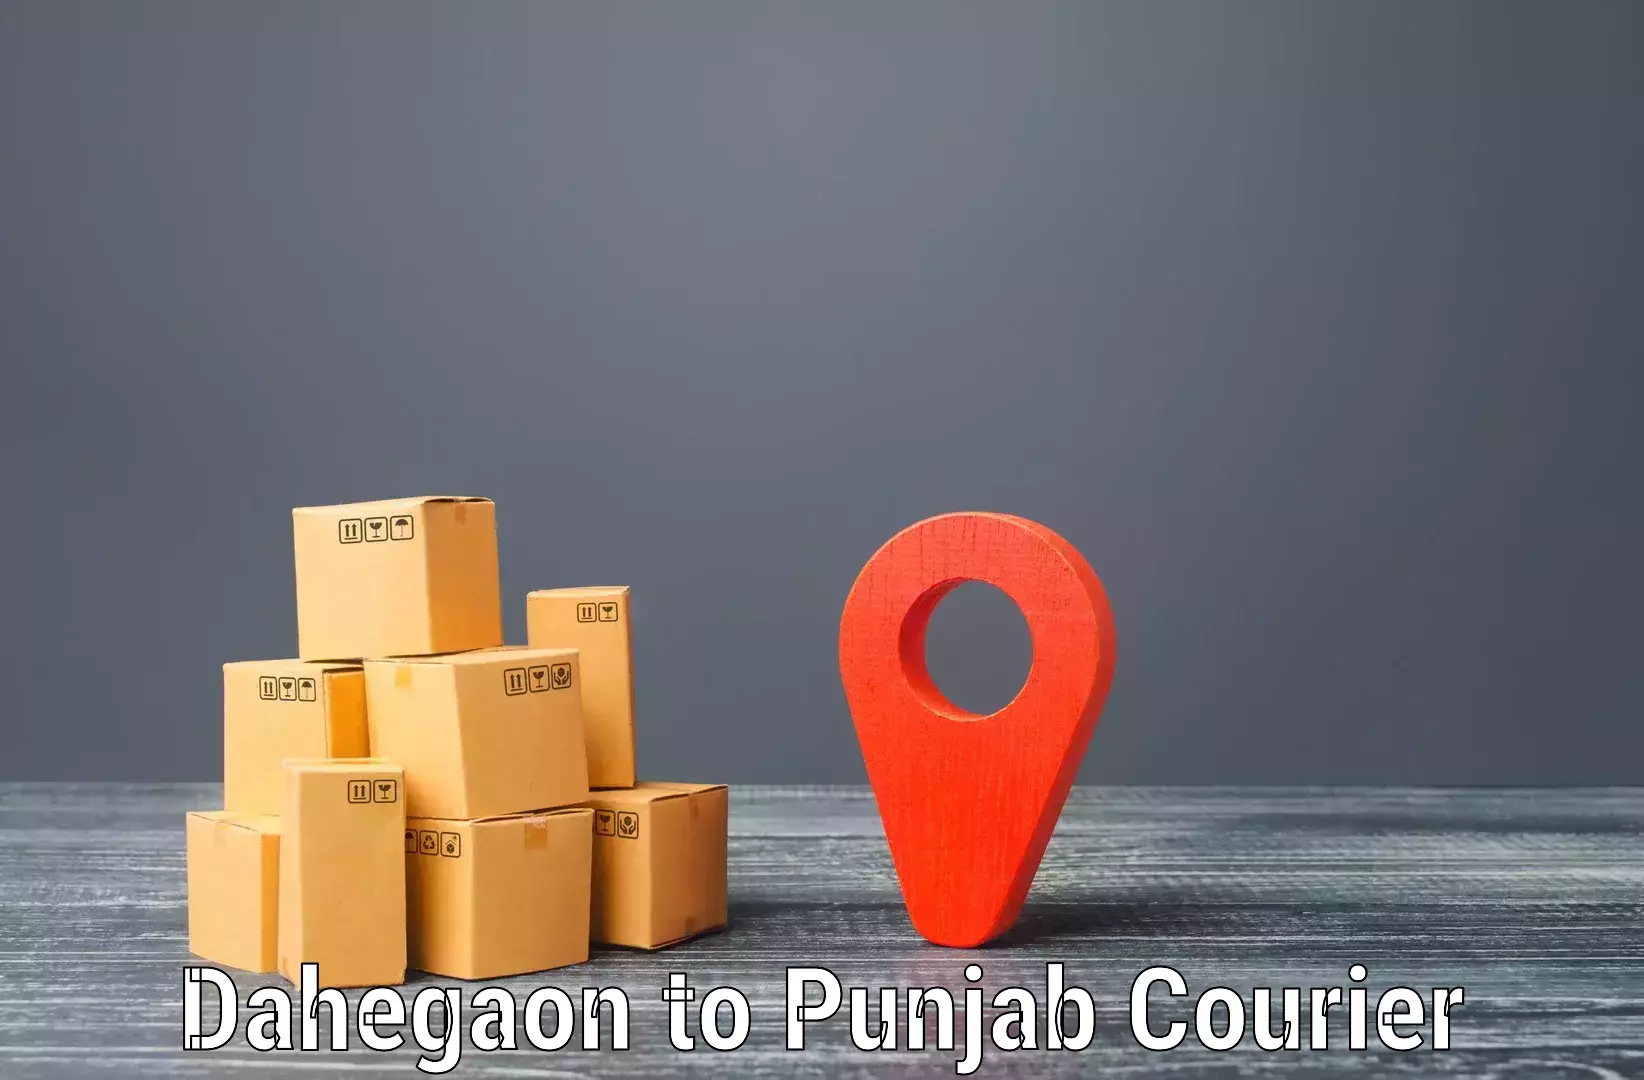 Cargo delivery service Dahegaon to Amritsar